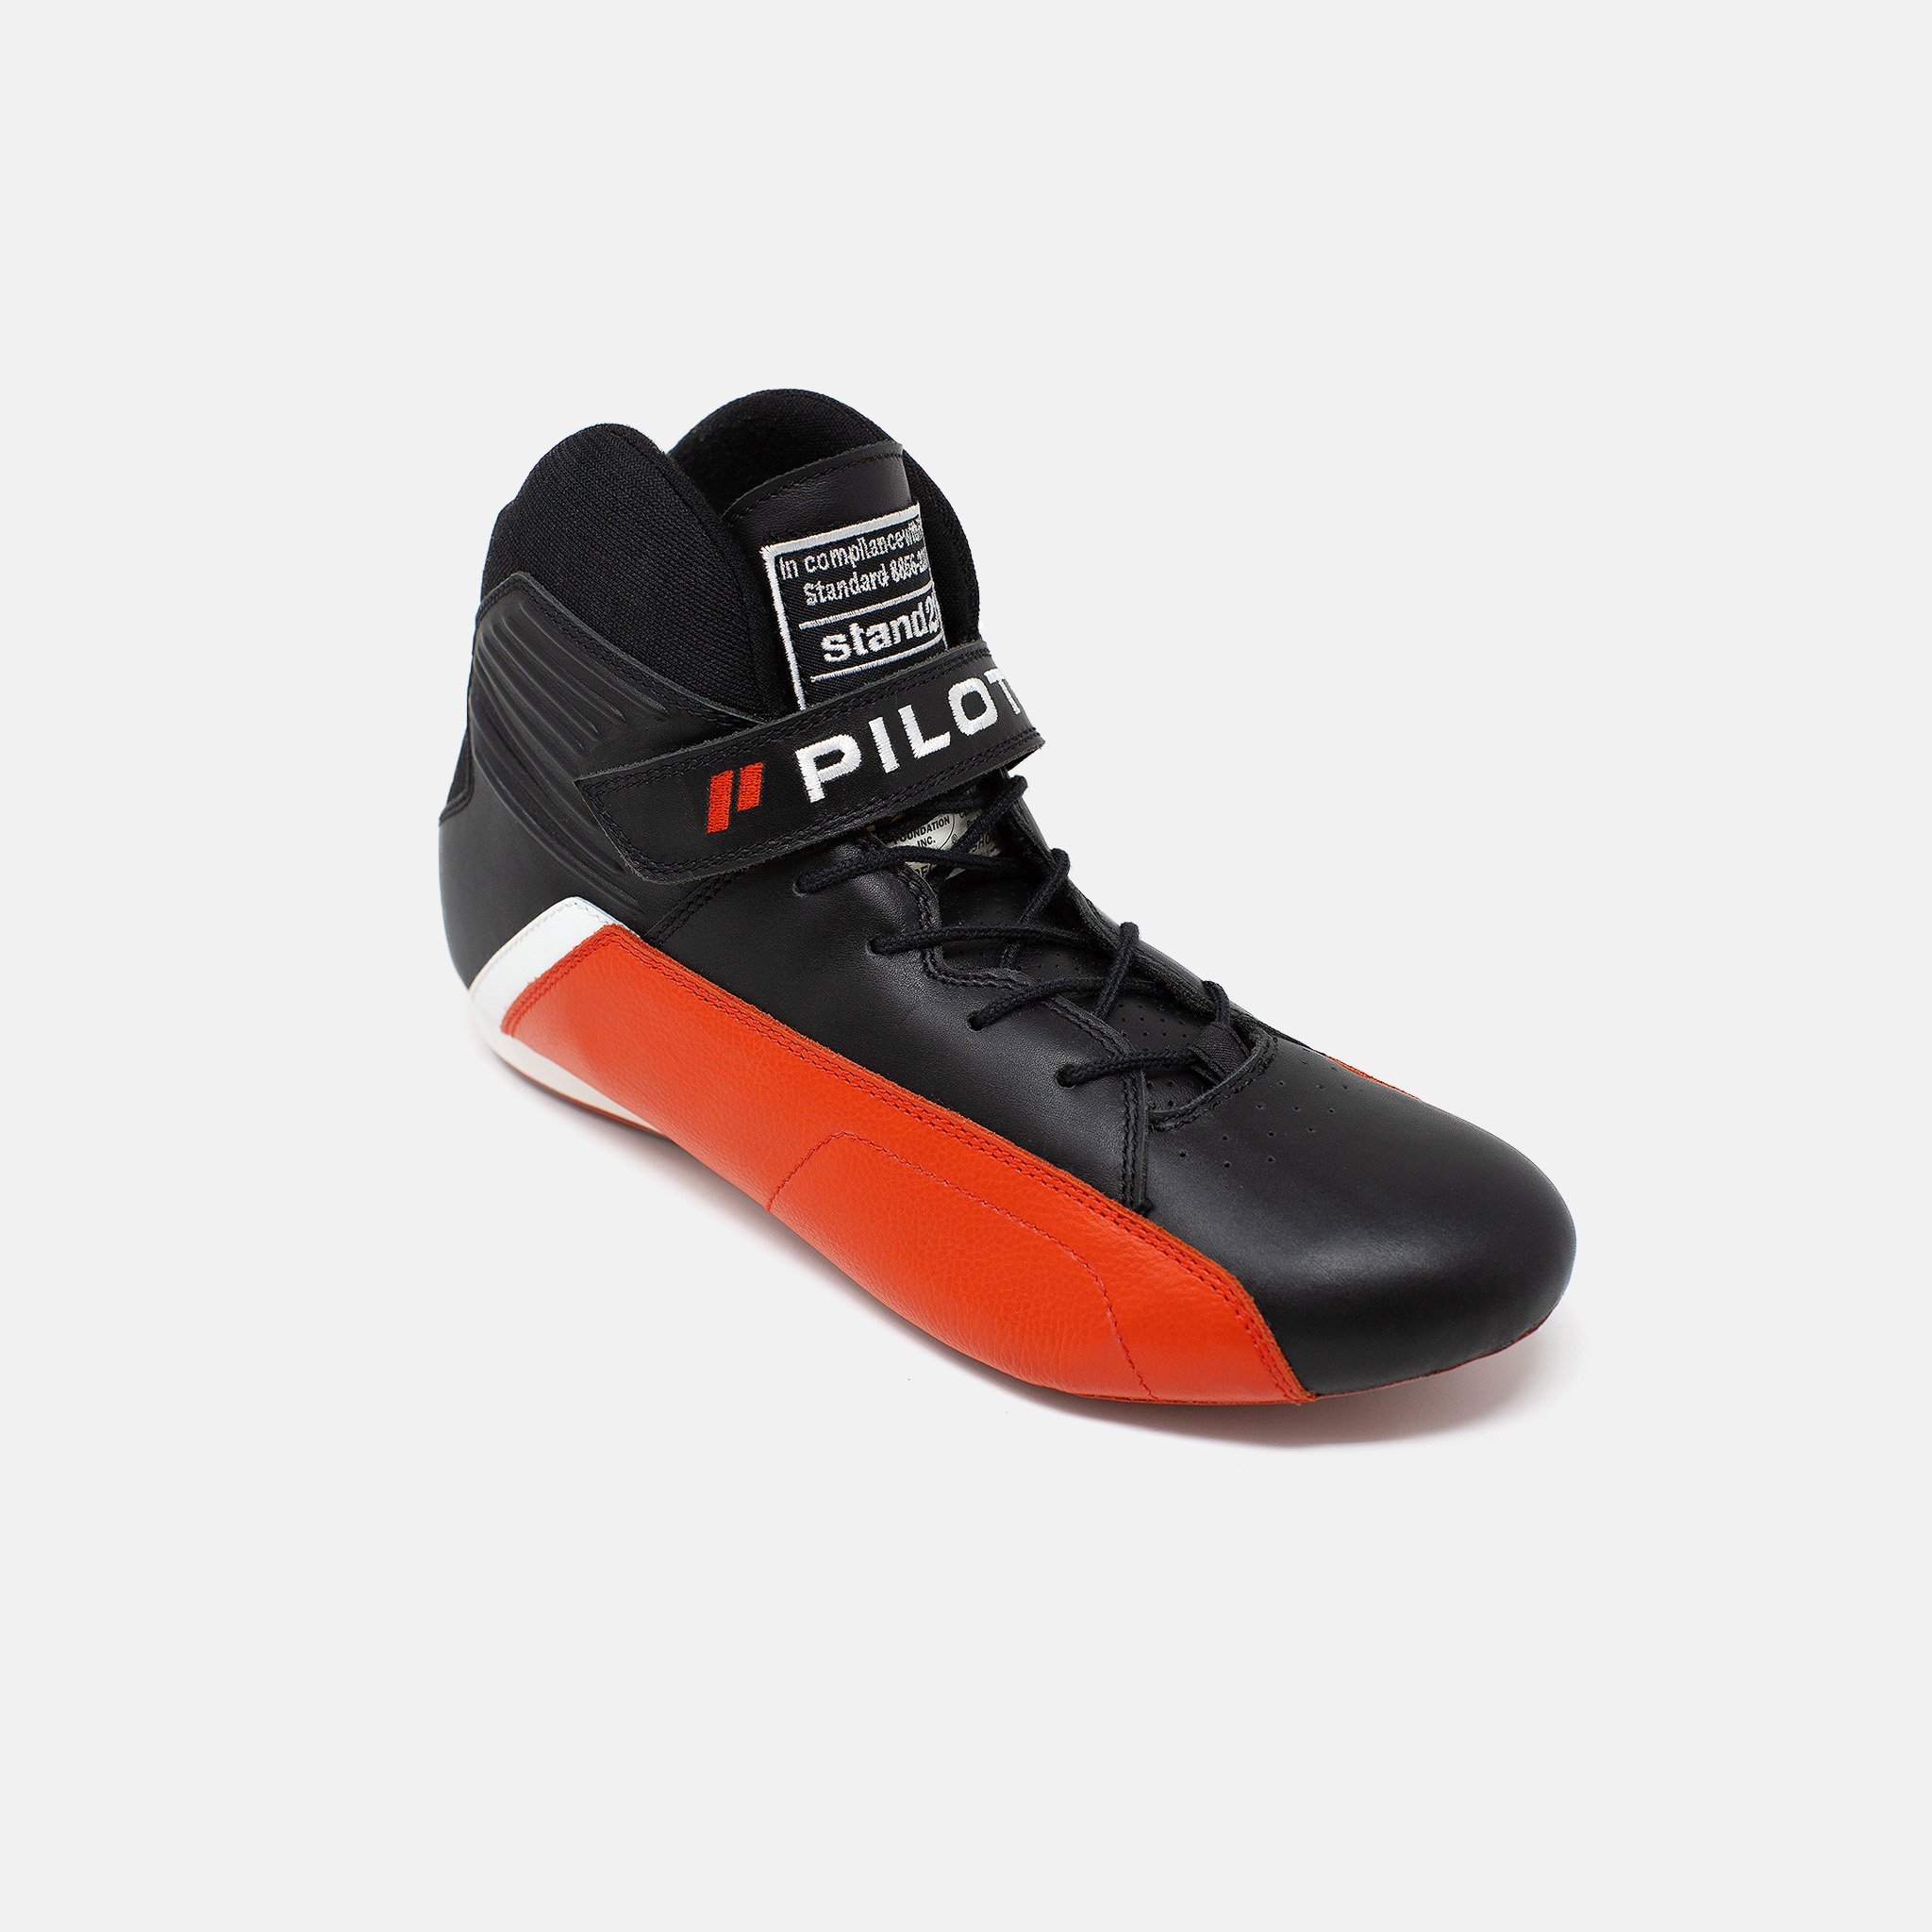 Pinnacle Piloti Racing Boots